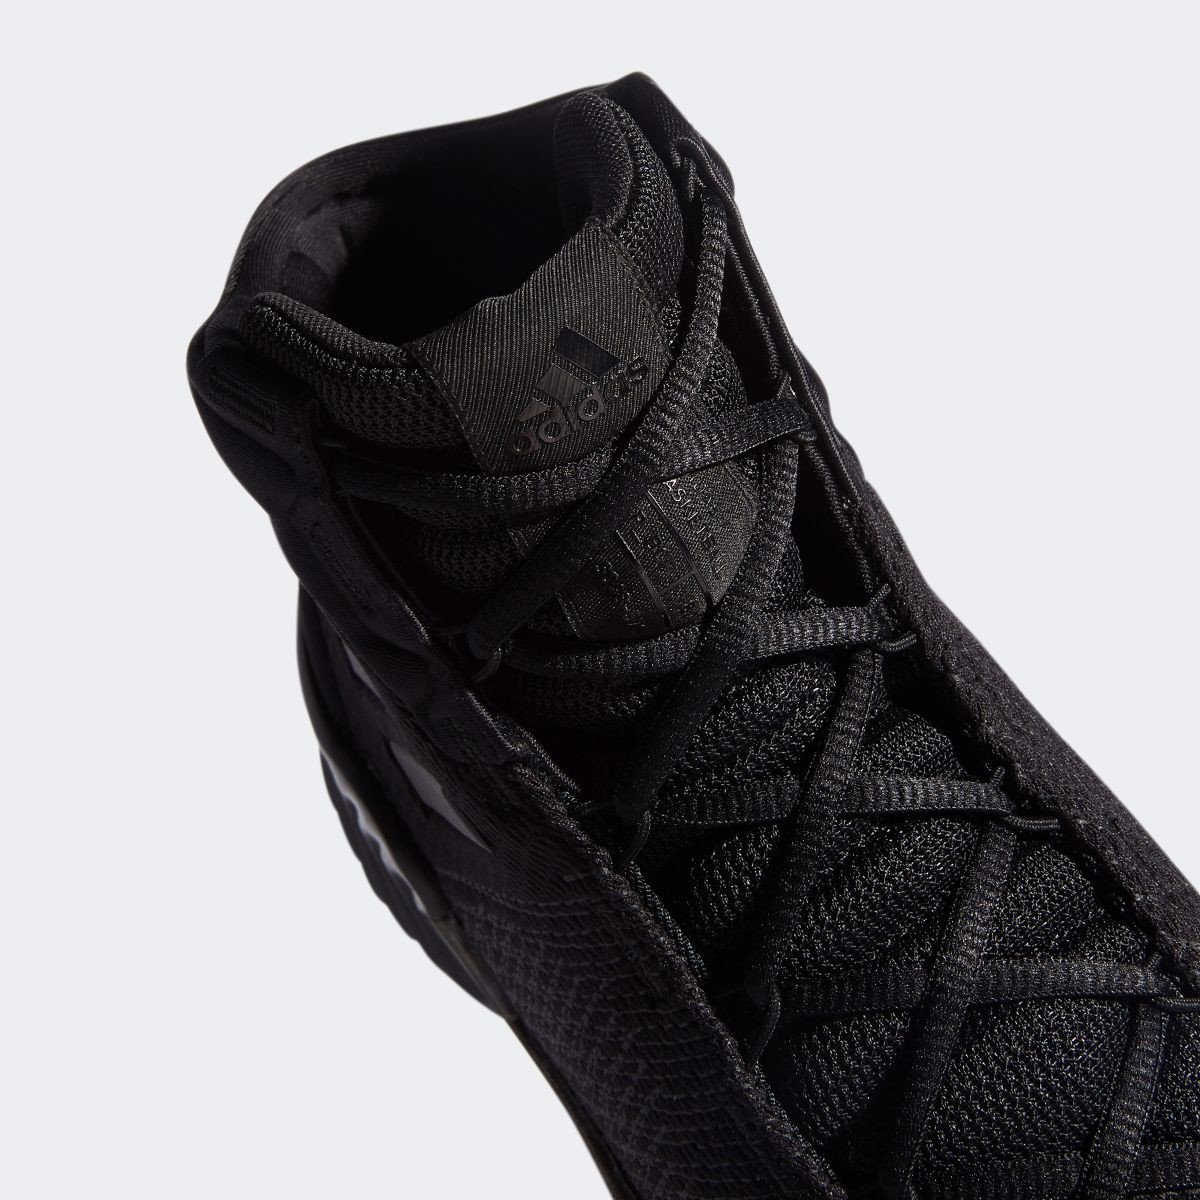 Adidas Pro bounce2018 All Black